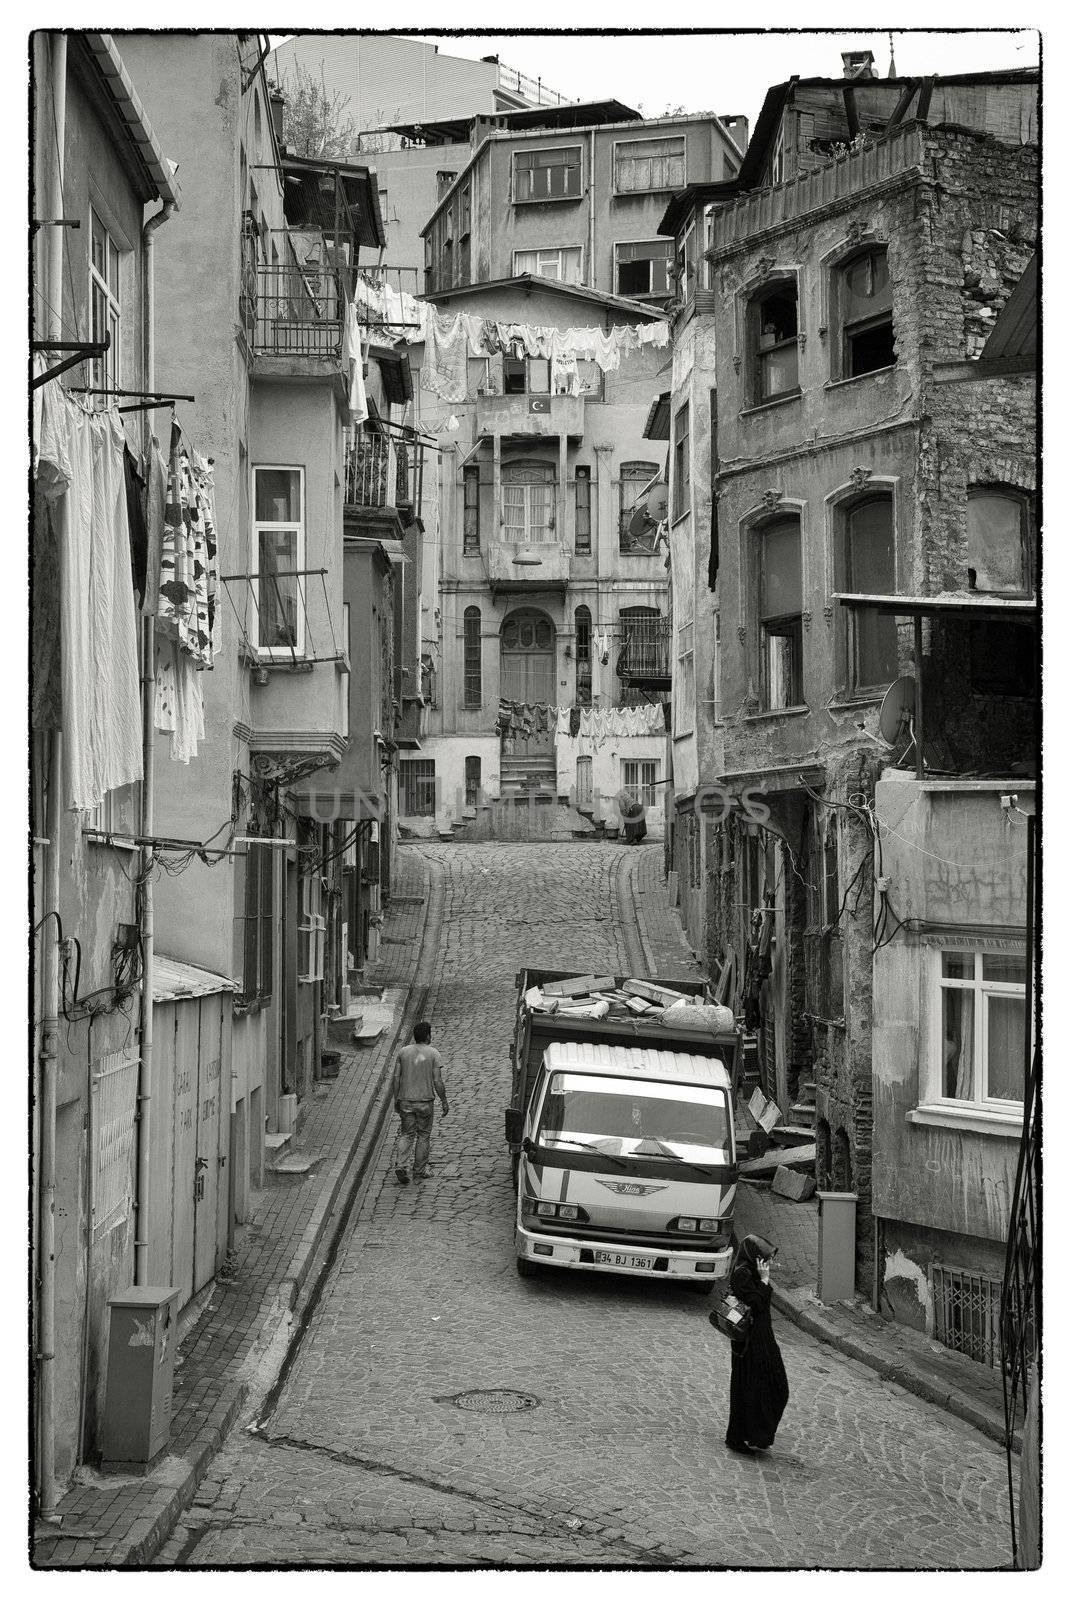 HOUSING AREA FATIH, ISTANBUL, TURKEY, APRIL 17, 2012: Typical housing area in the elder part of Istanbul, Turkey.